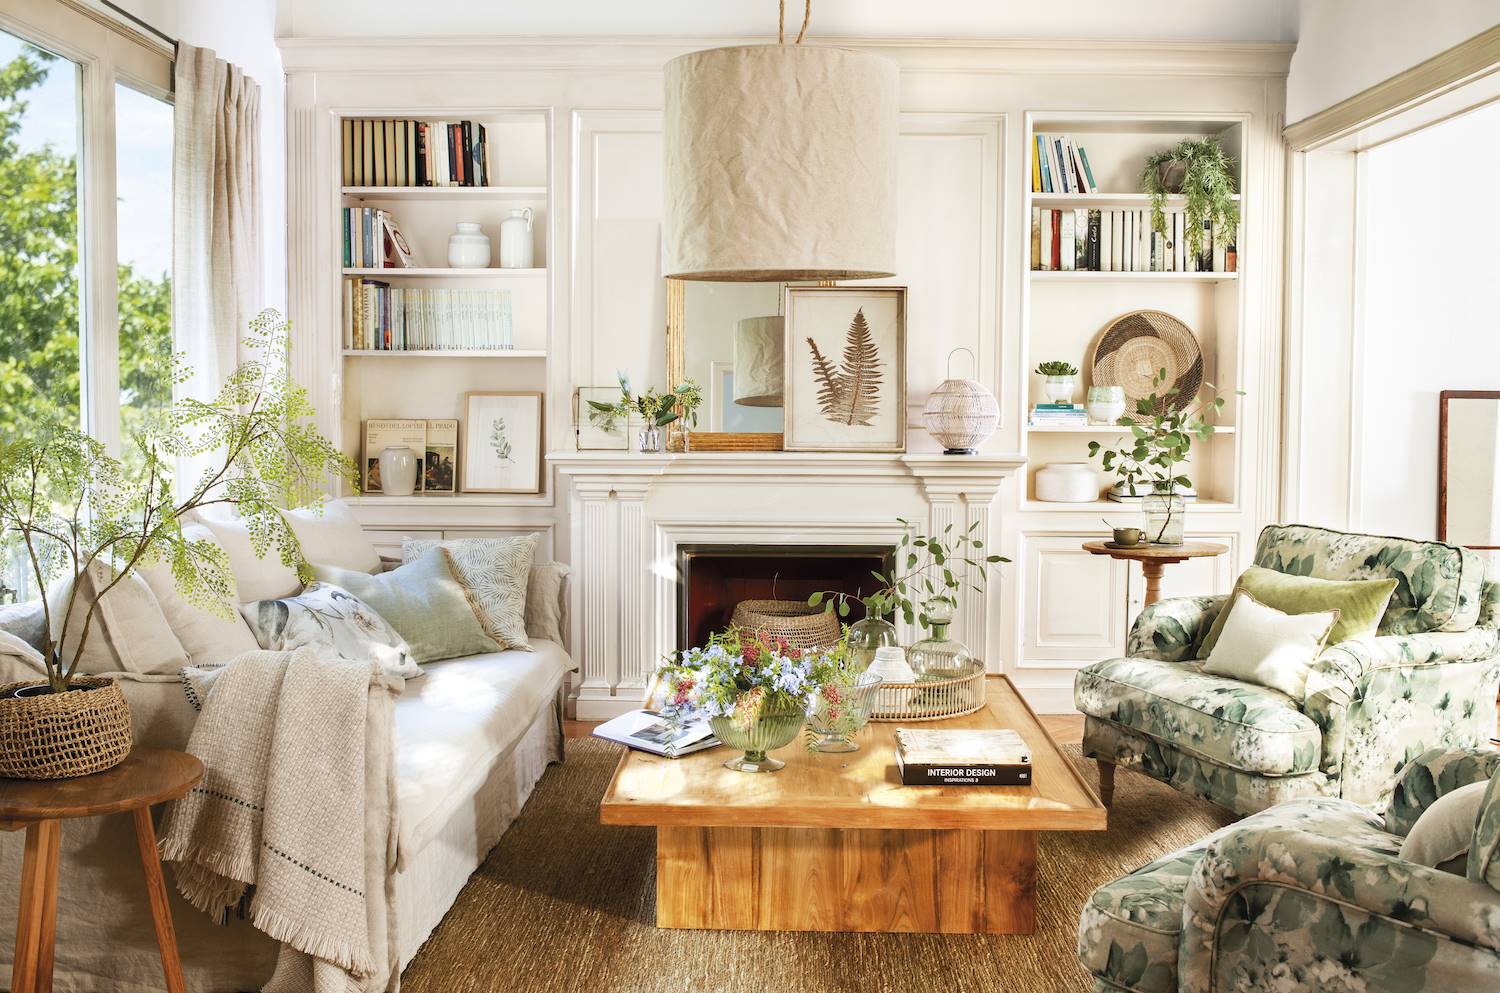 Salón moderno con butacas con estampados naturales, chimenea, librerías y sofá blanco.